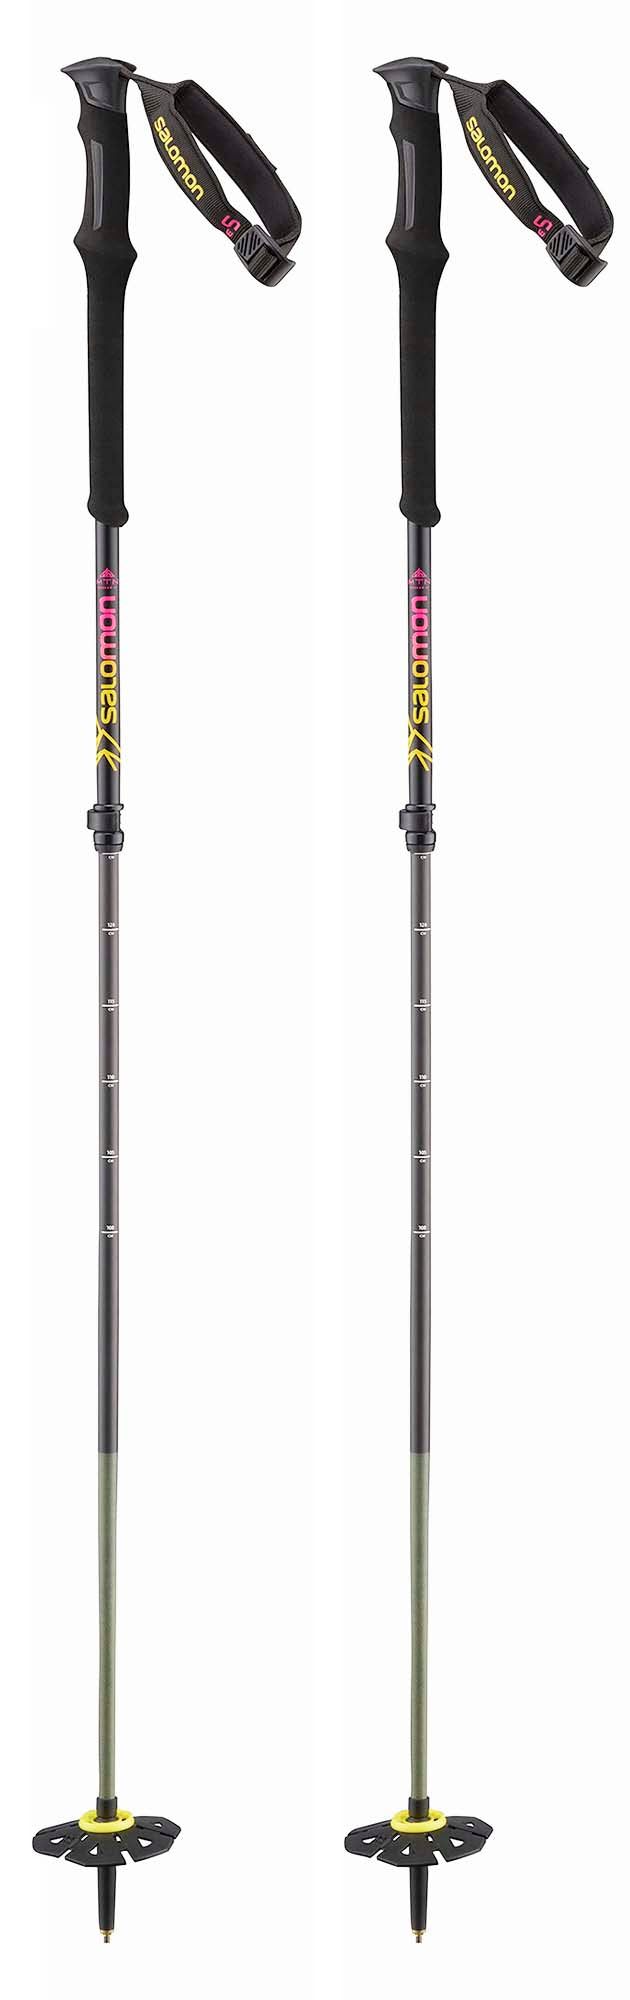 Salomon Mountain Carbon S3 Adjustable Poles